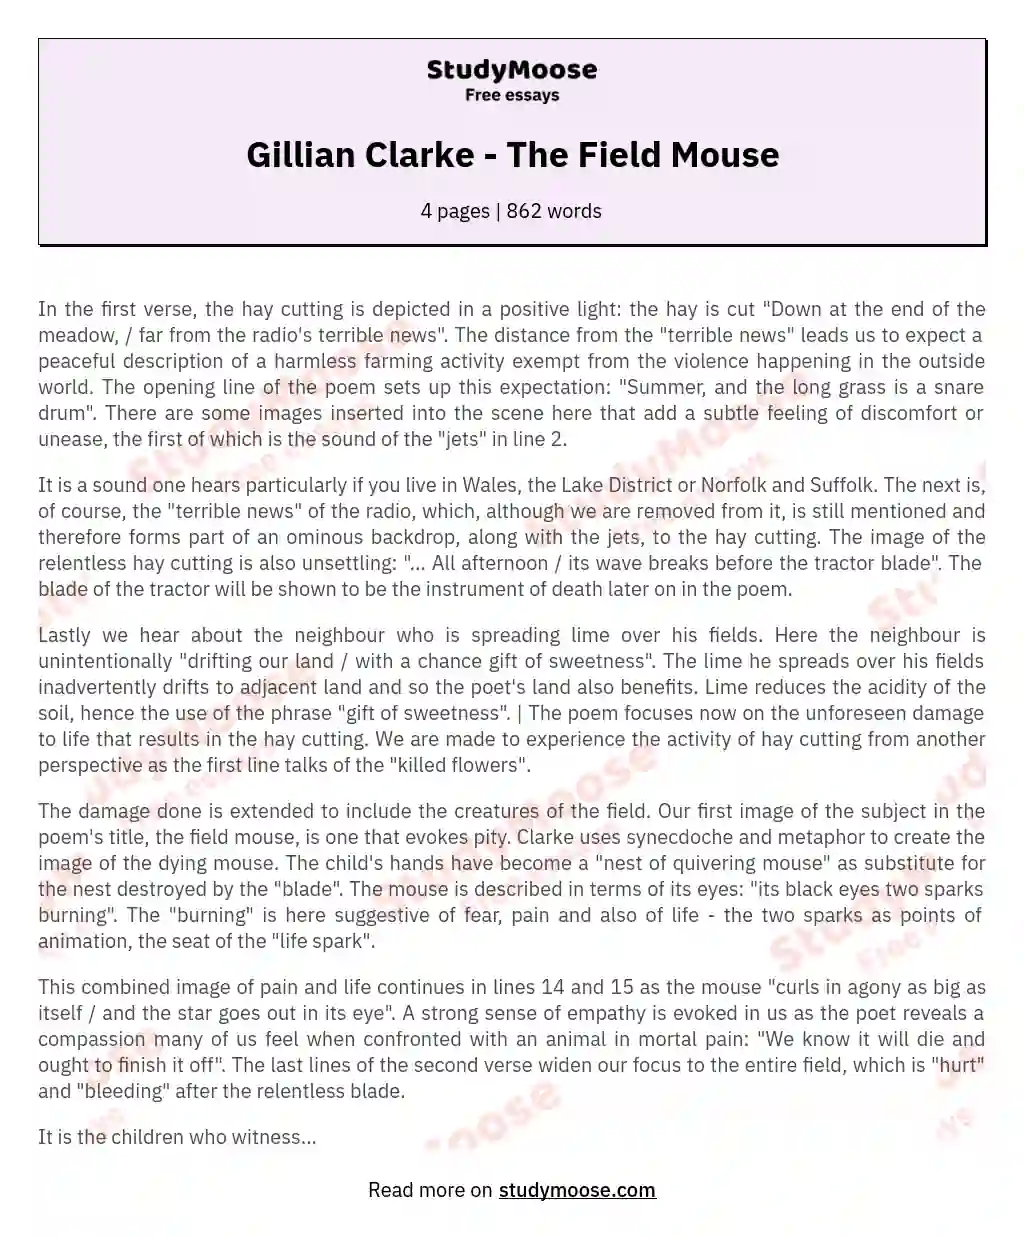 Gillian Clarke - The Field Mouse essay